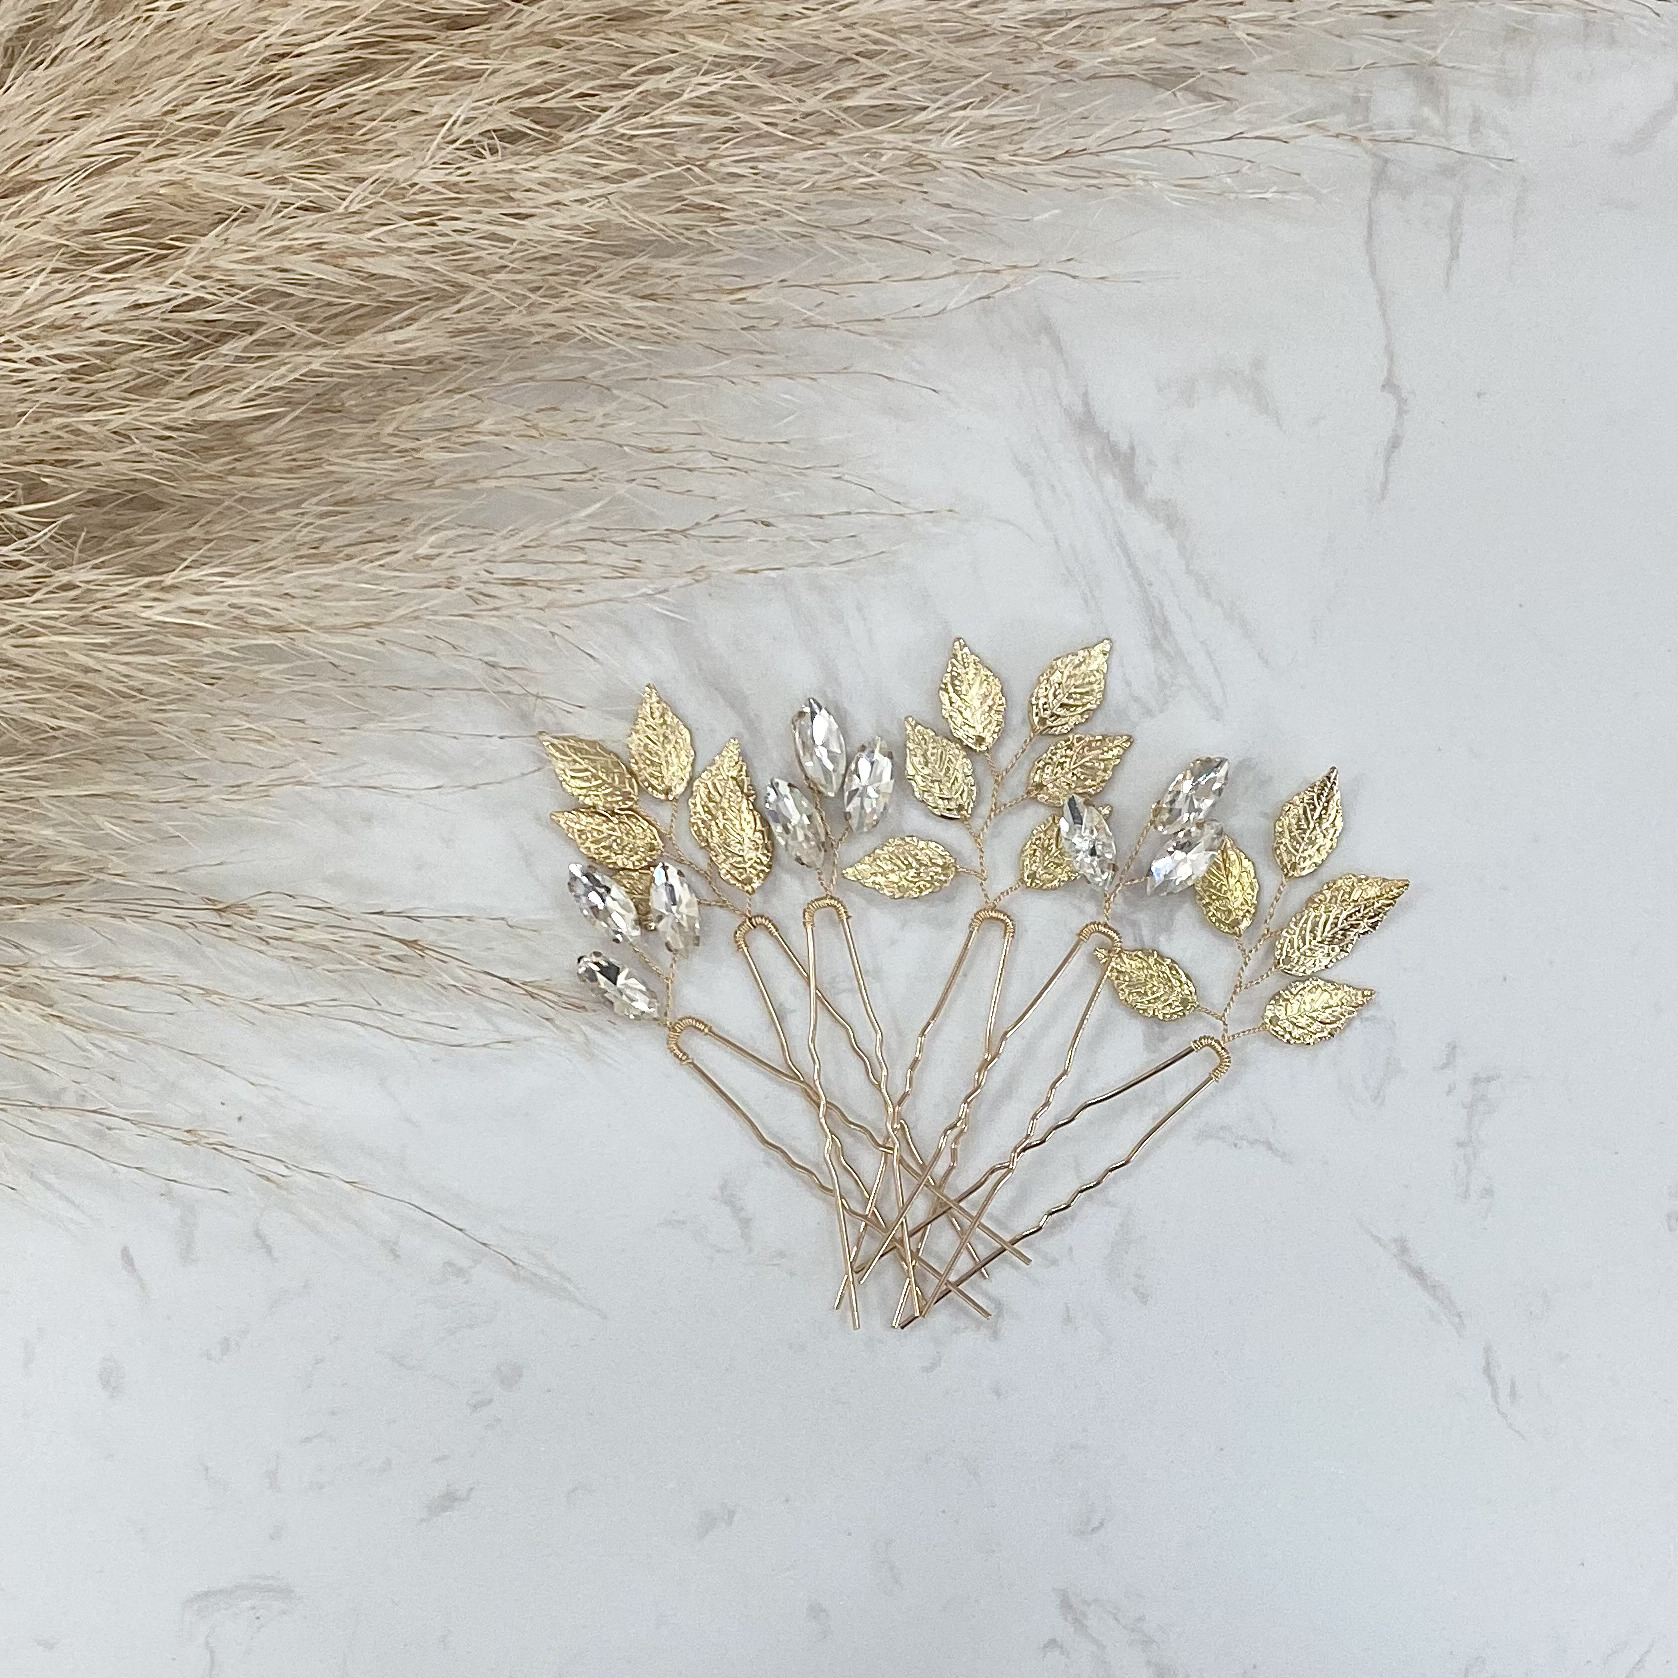 Gold leaf pins